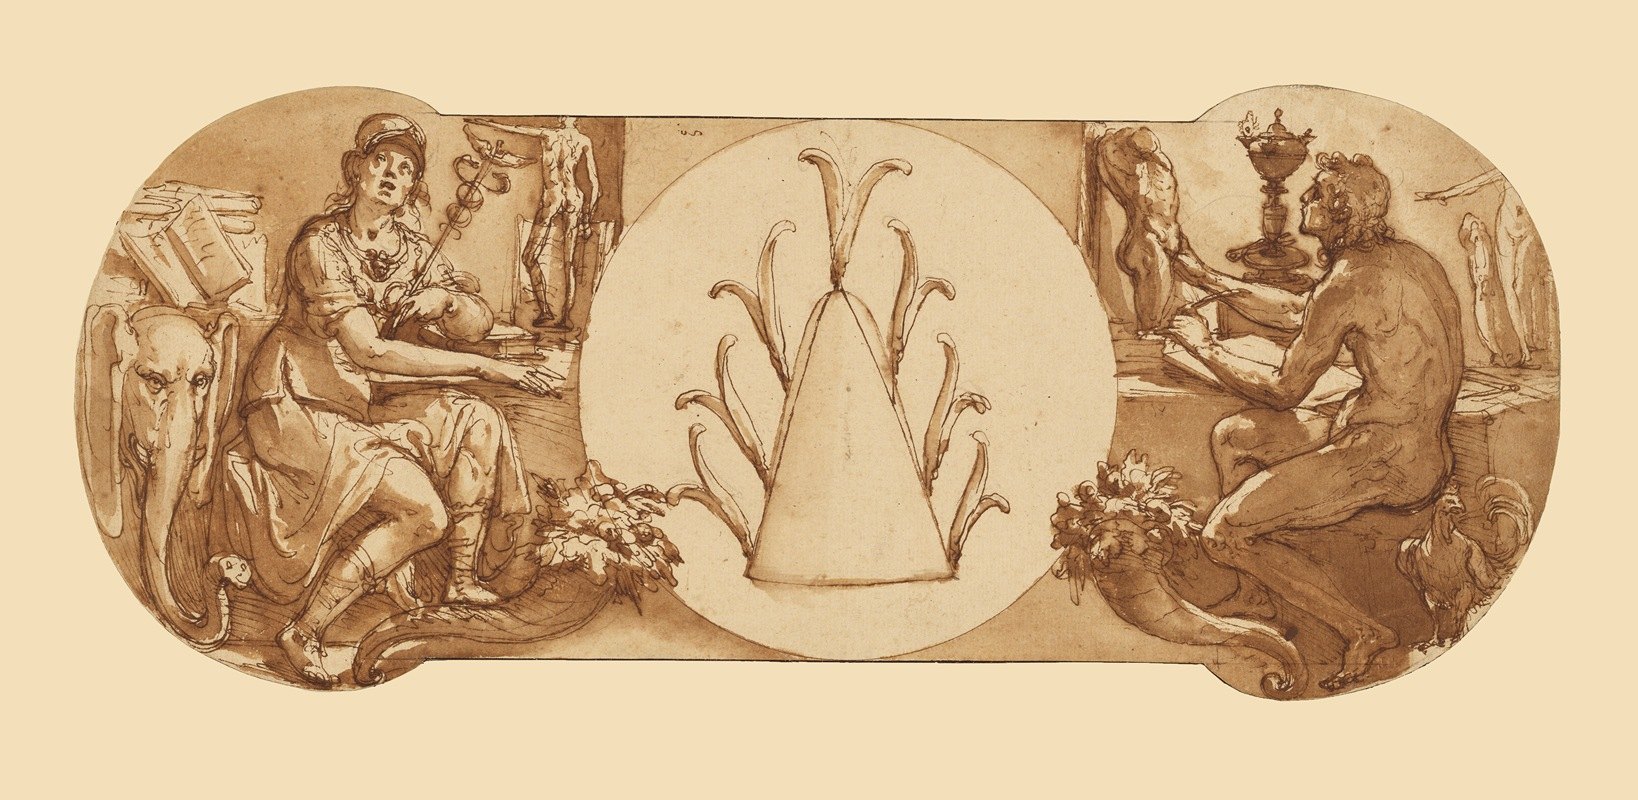 祖卡罗徽章两侧的研究和智慧寓言`Allegories of Study and Intelligence Flanking the Zuccaro Emblem (1595) by Federico Zuccaro